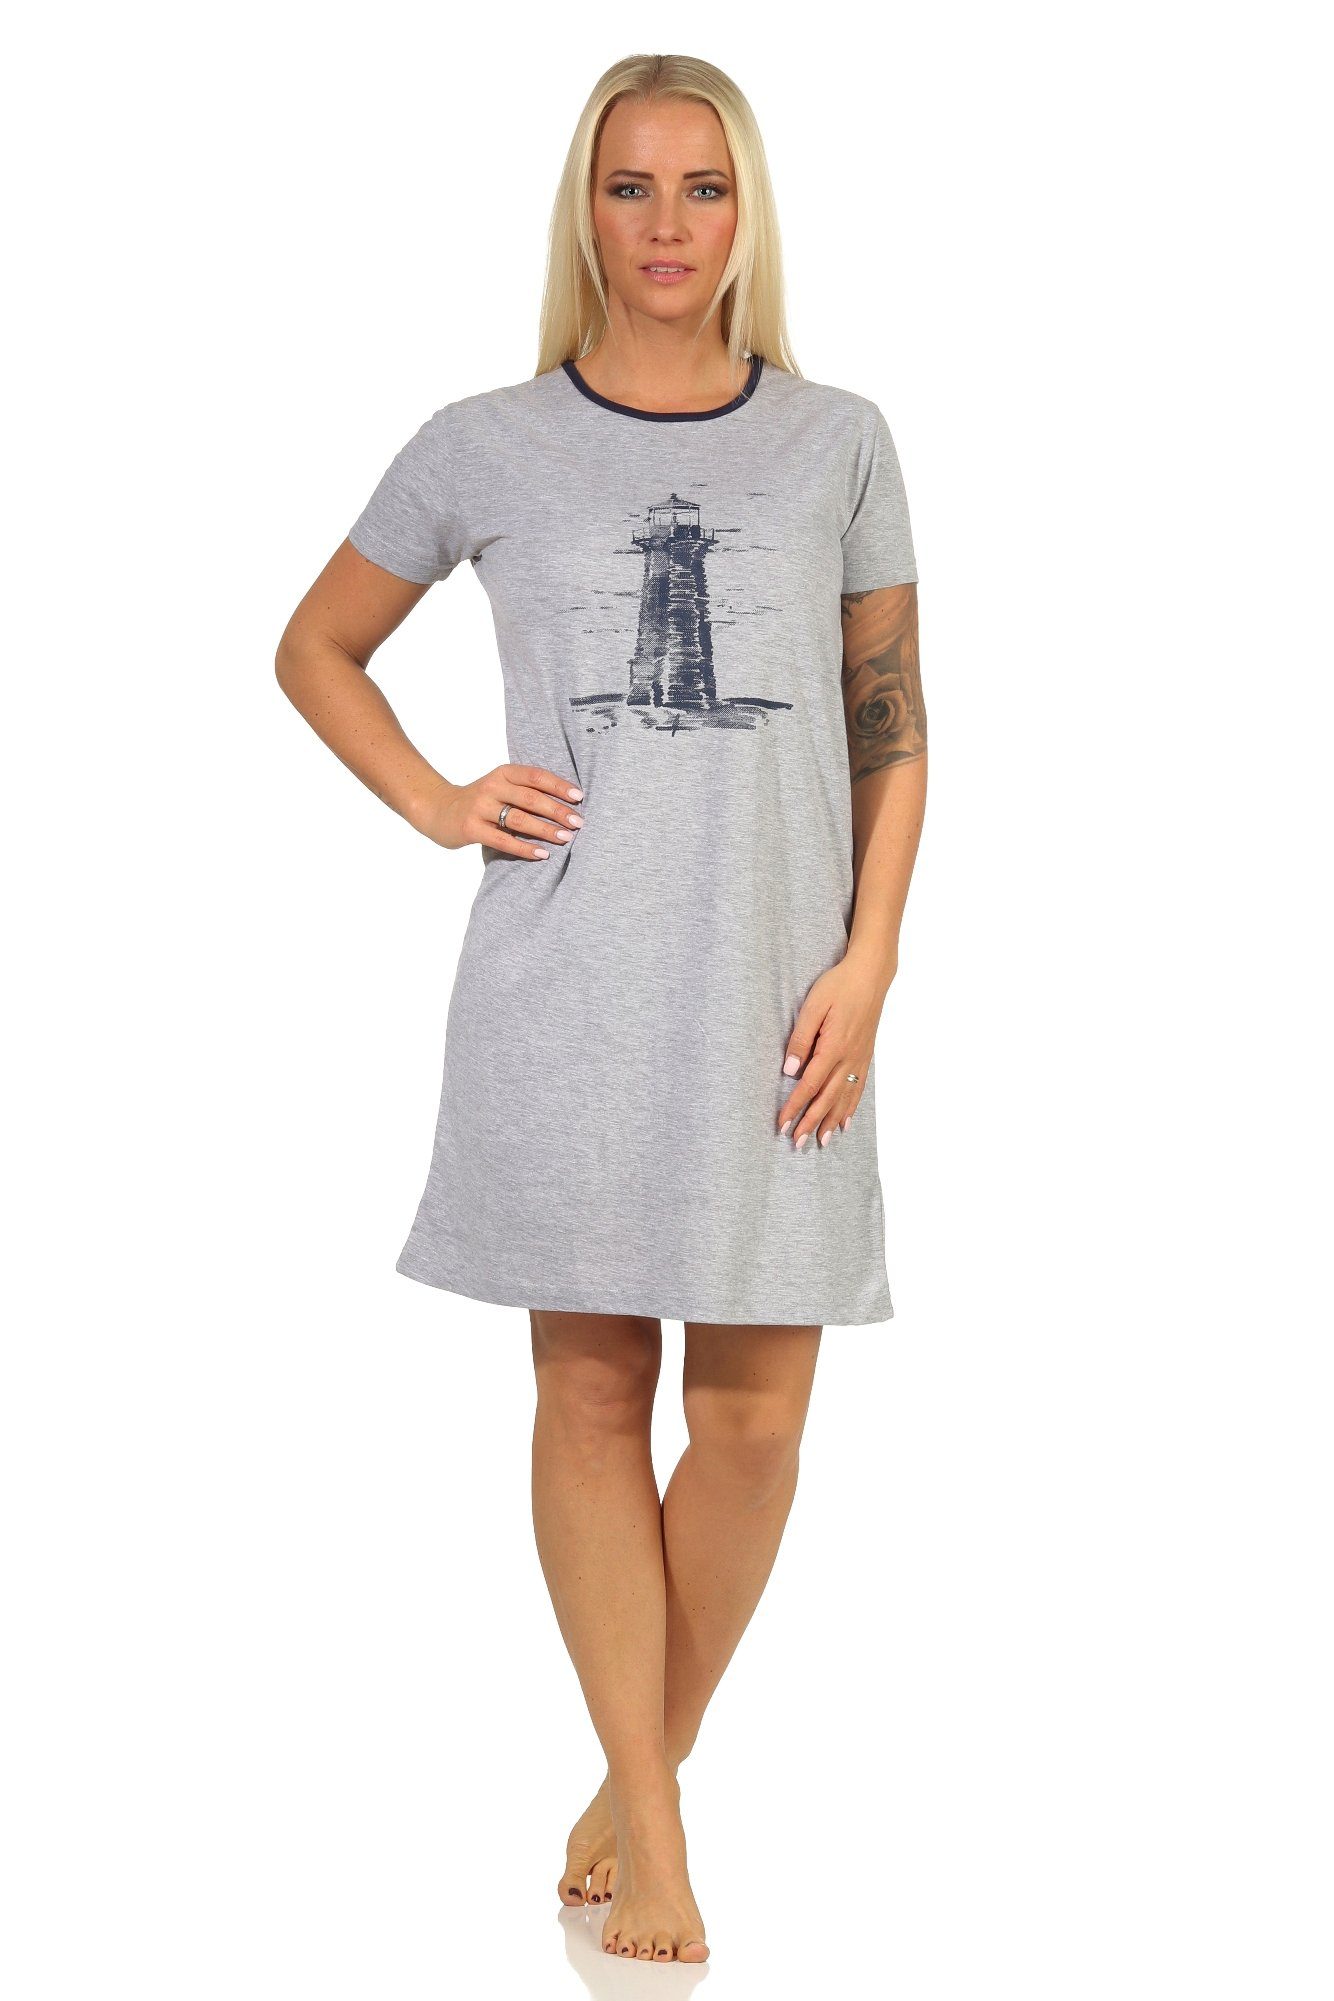 RELAX by Normann Nachthemd Damen Nachthemd kurzarm im maritimen Look und Leuchtturm als Motiv grau